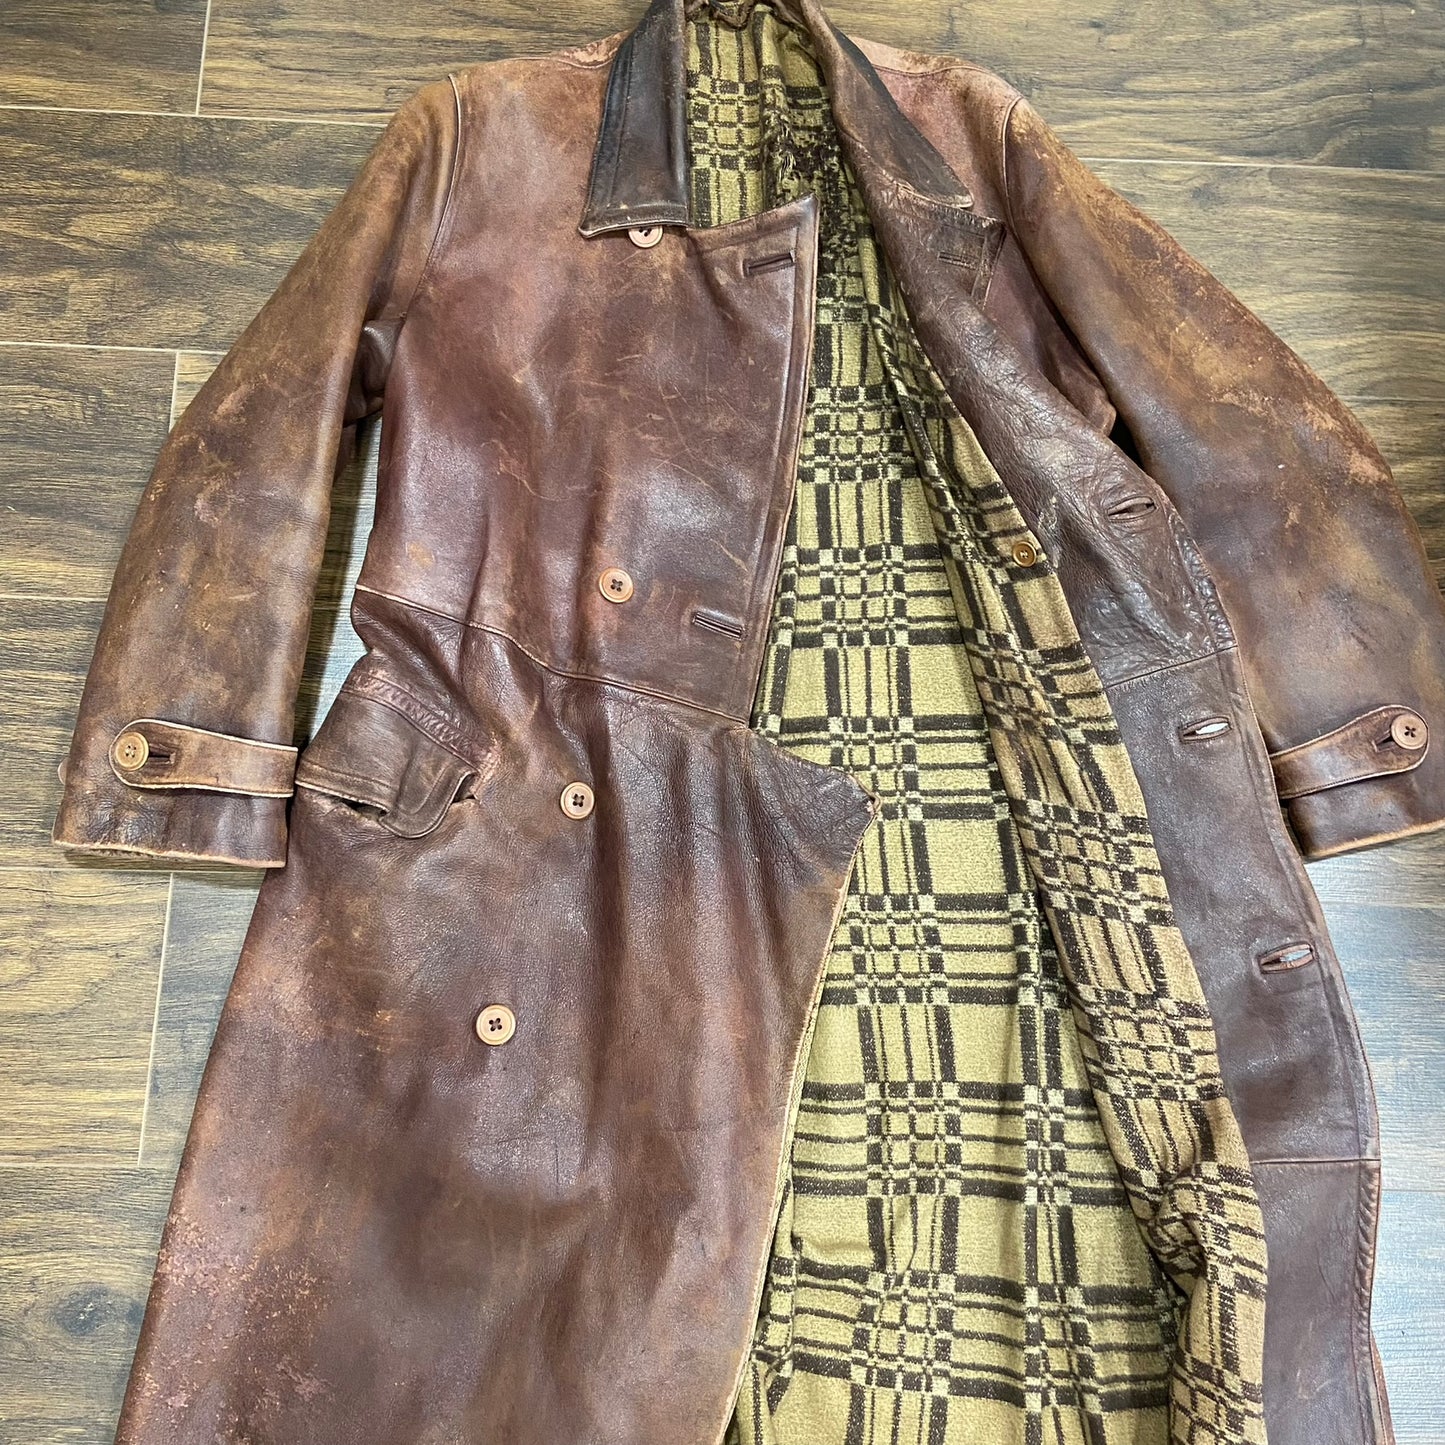 Circa 1920s leather aviation / motoring coat size large stunning